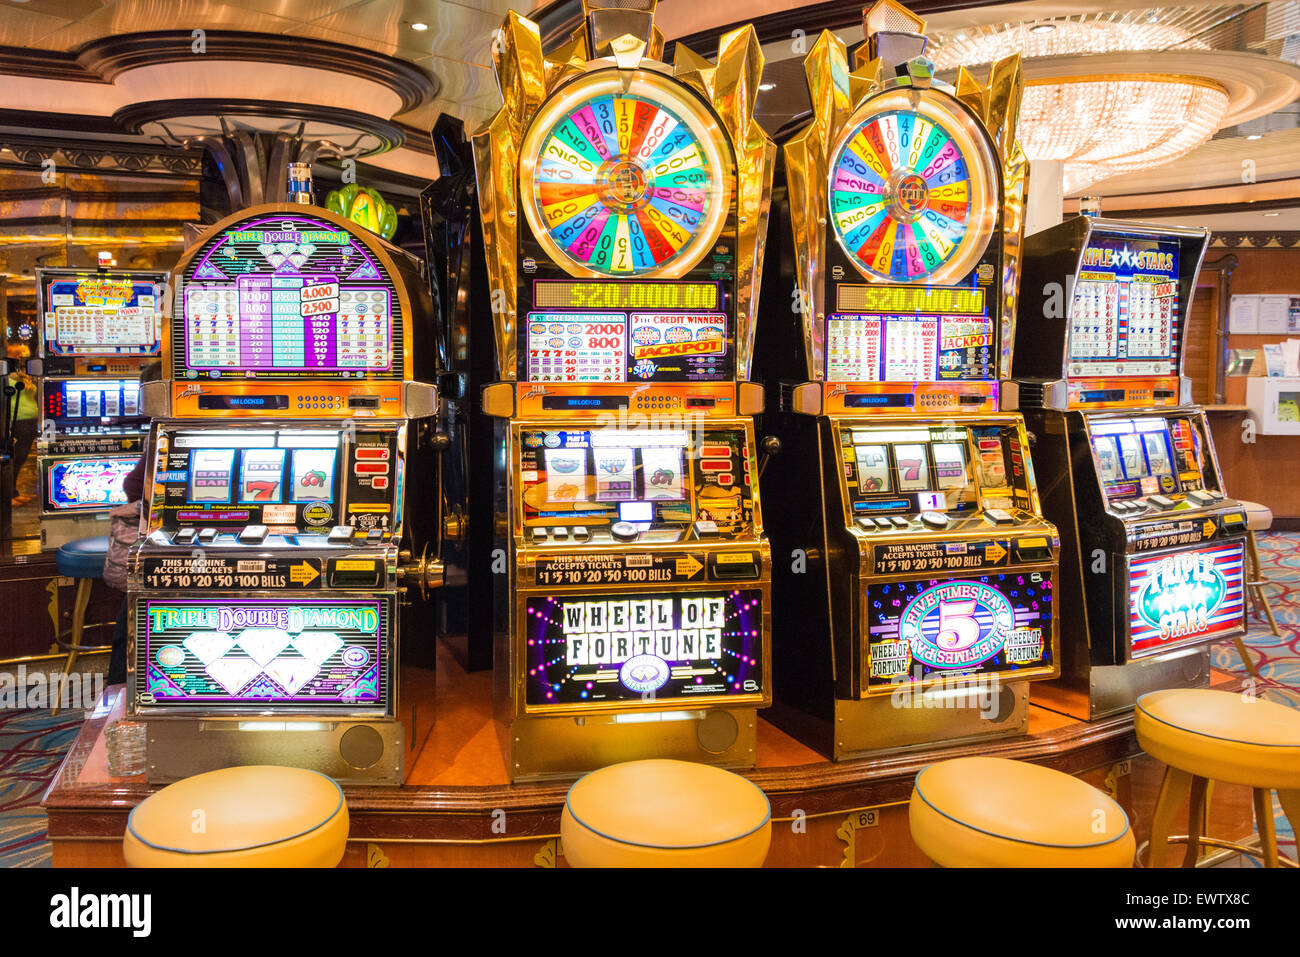 Spielautomaten im Casino an Bord von Royal Caribbean "Brilliance of the Seas" Kreuzfahrt Schiff, Nordsee, Europa Stockfoto